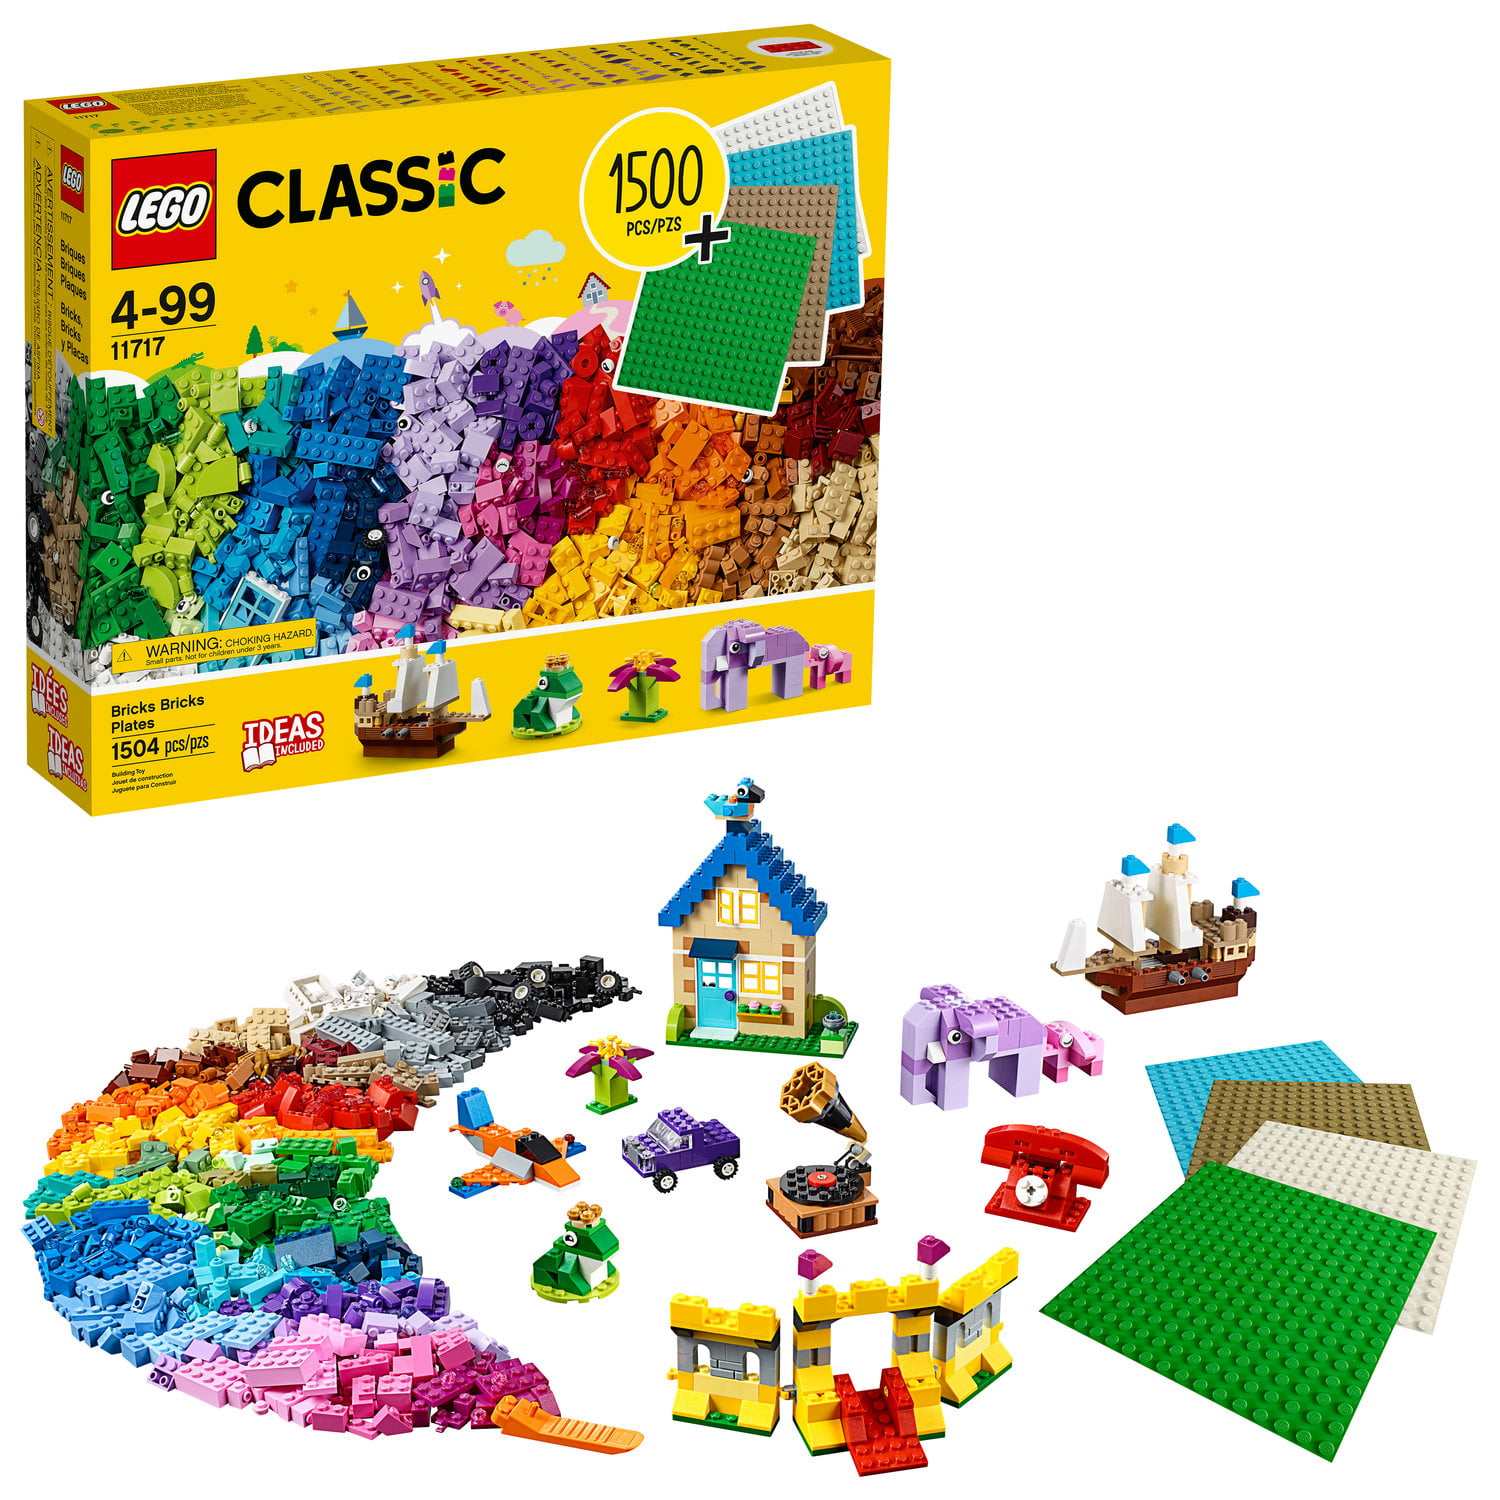 Brand New in Retail Box Lego Classic 10698 Large Creative Brick Box 790 pieces 